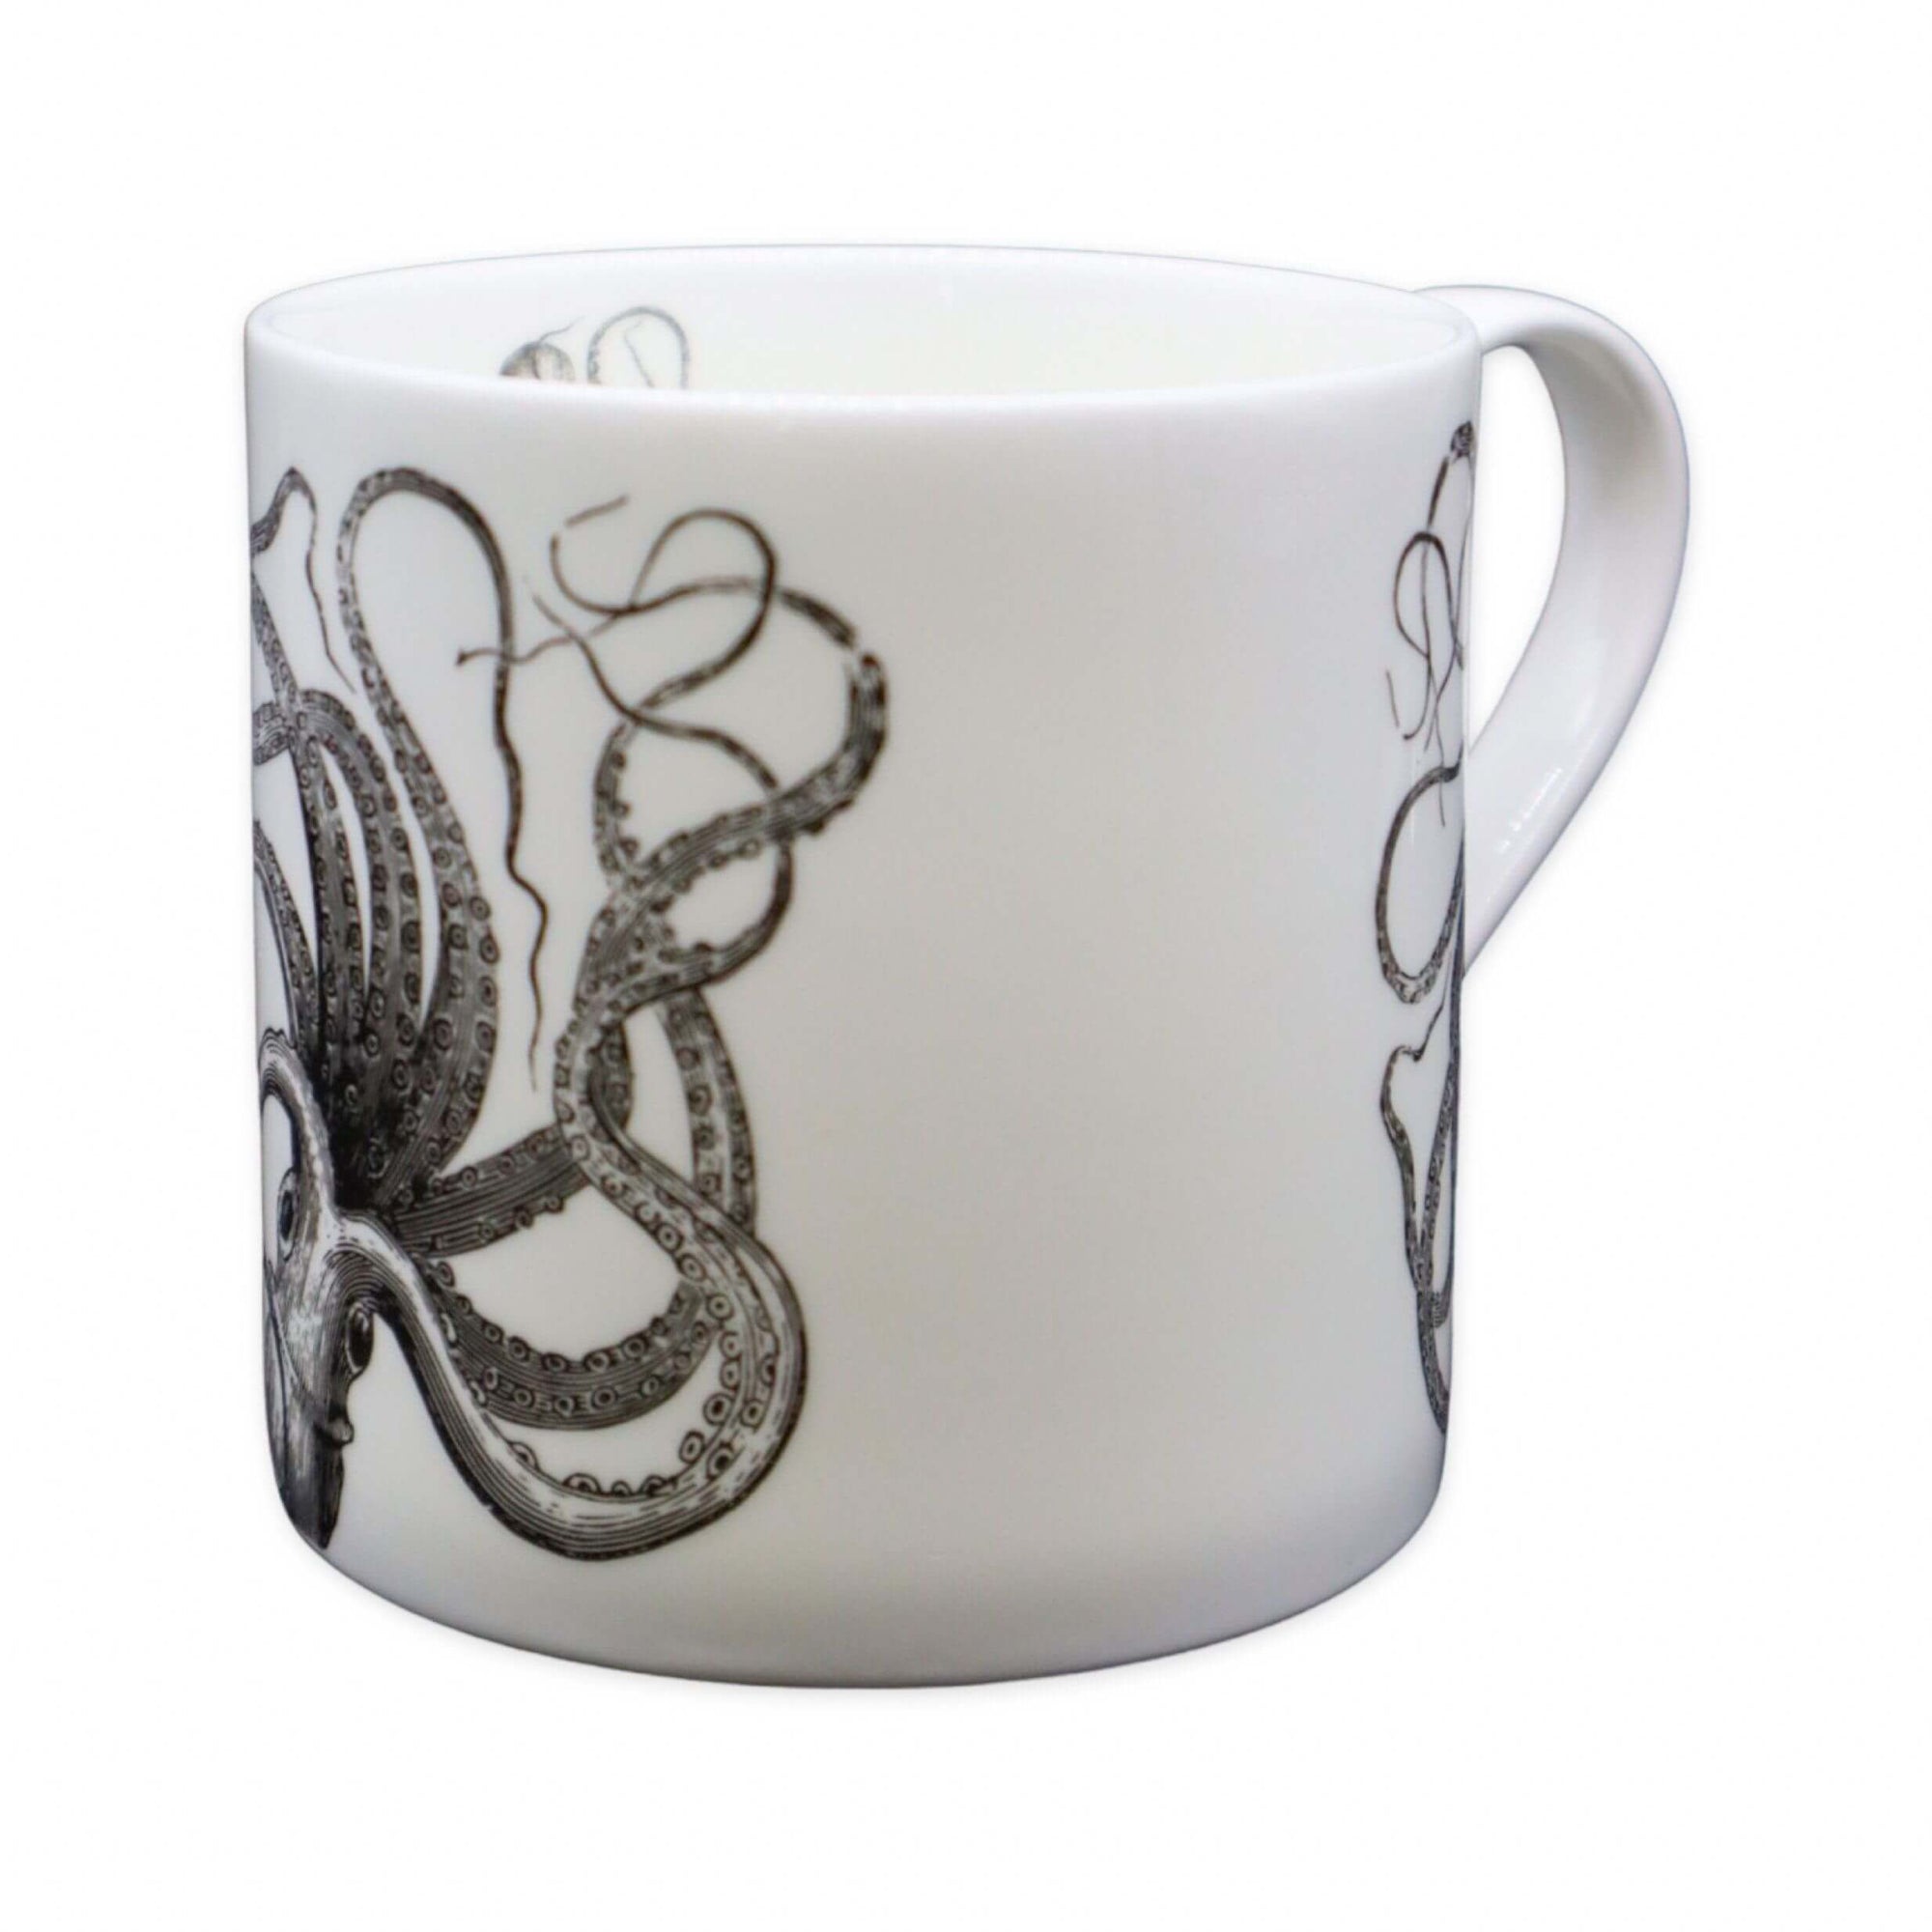 Kraken Can Can 400ml Bone China Mug Mugs Mustard and Gray Ltd Shropshire UK